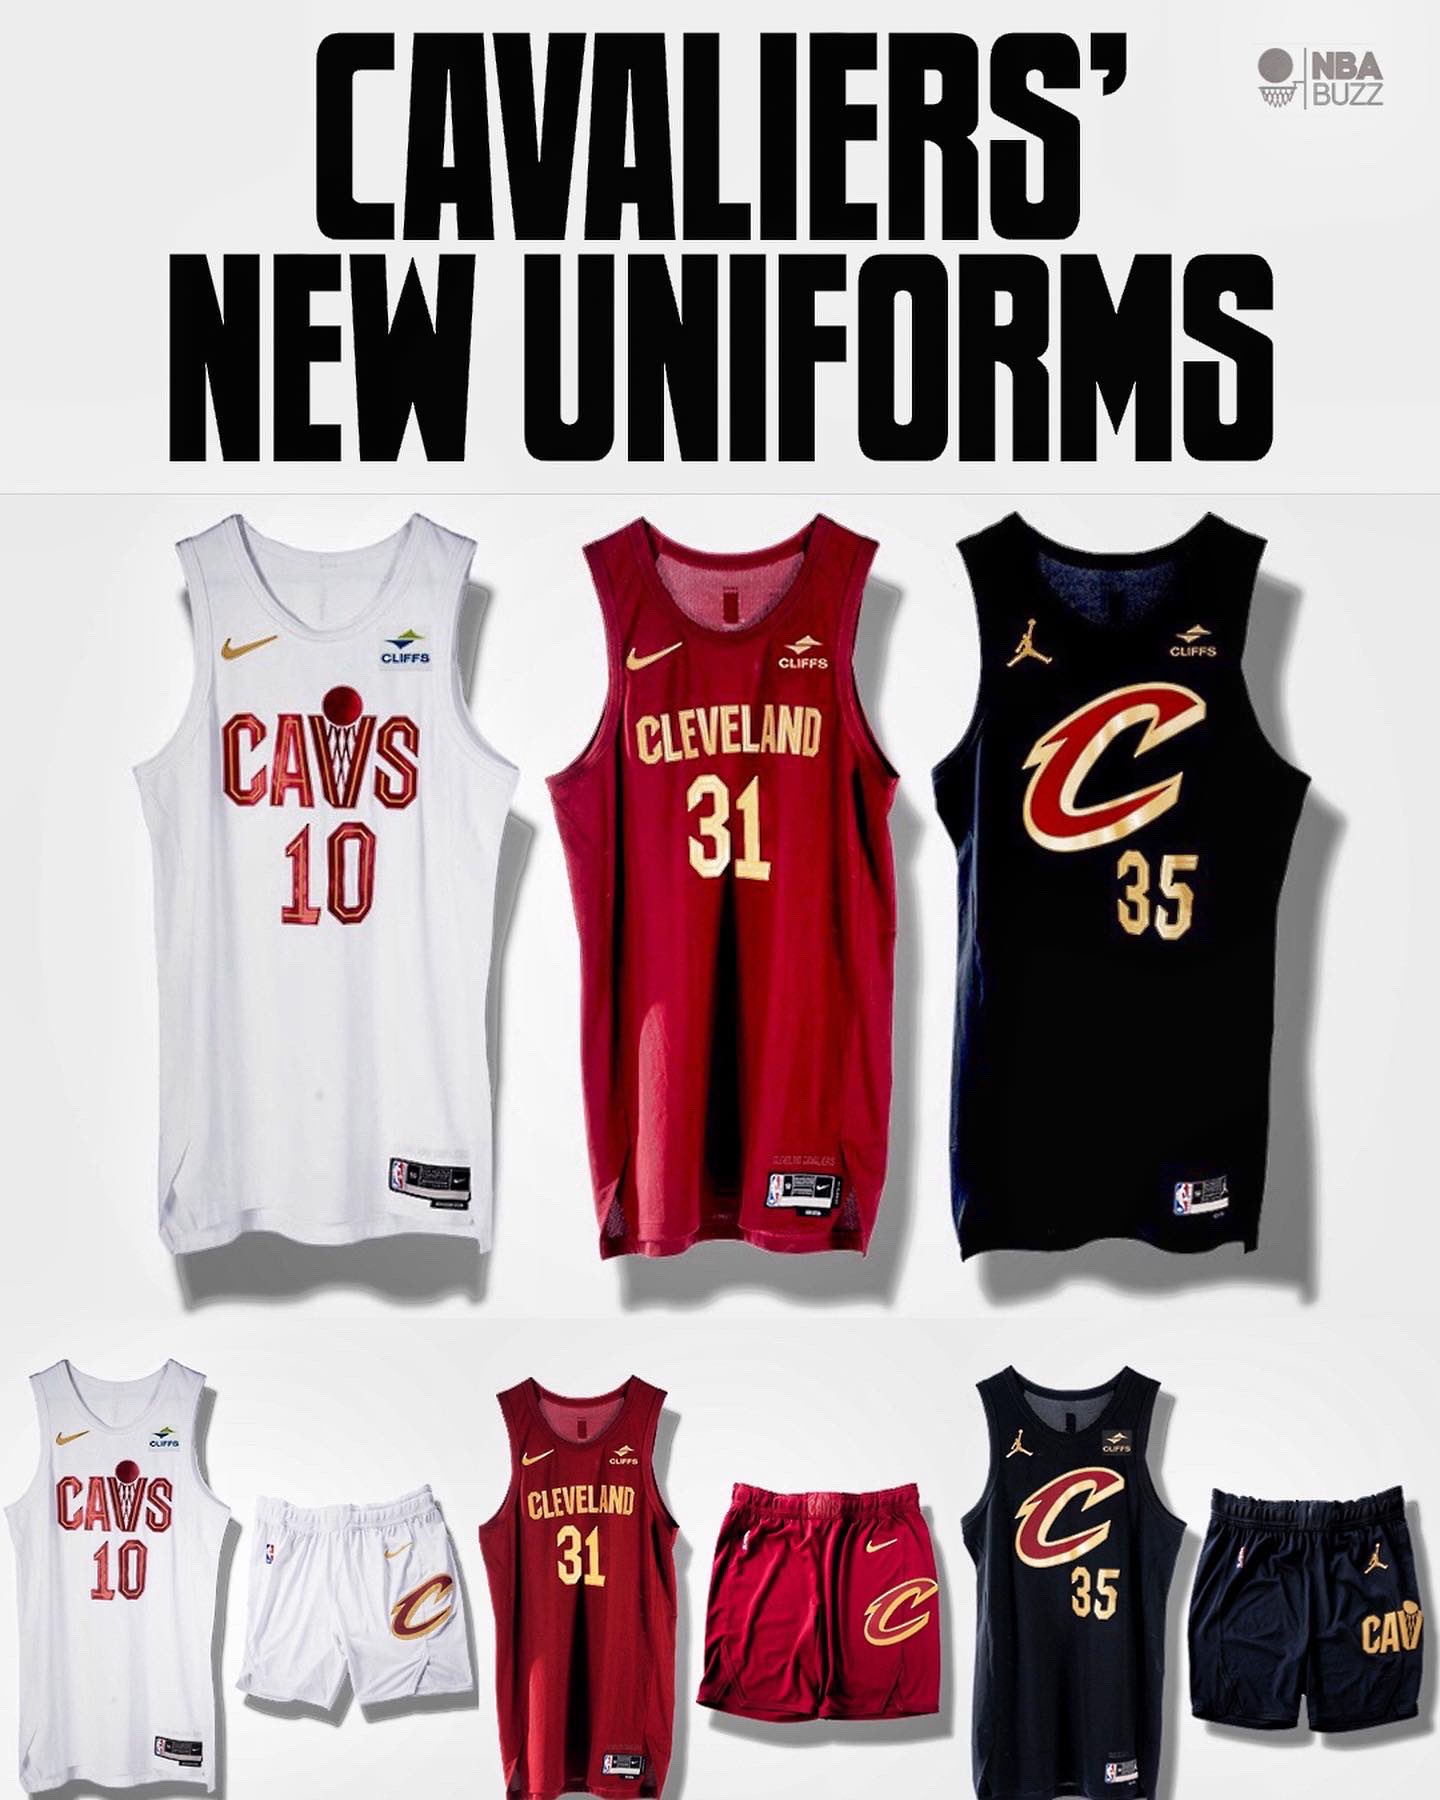 Cavs Unveil Three New Alternate Uniforms for 2015-16 Season